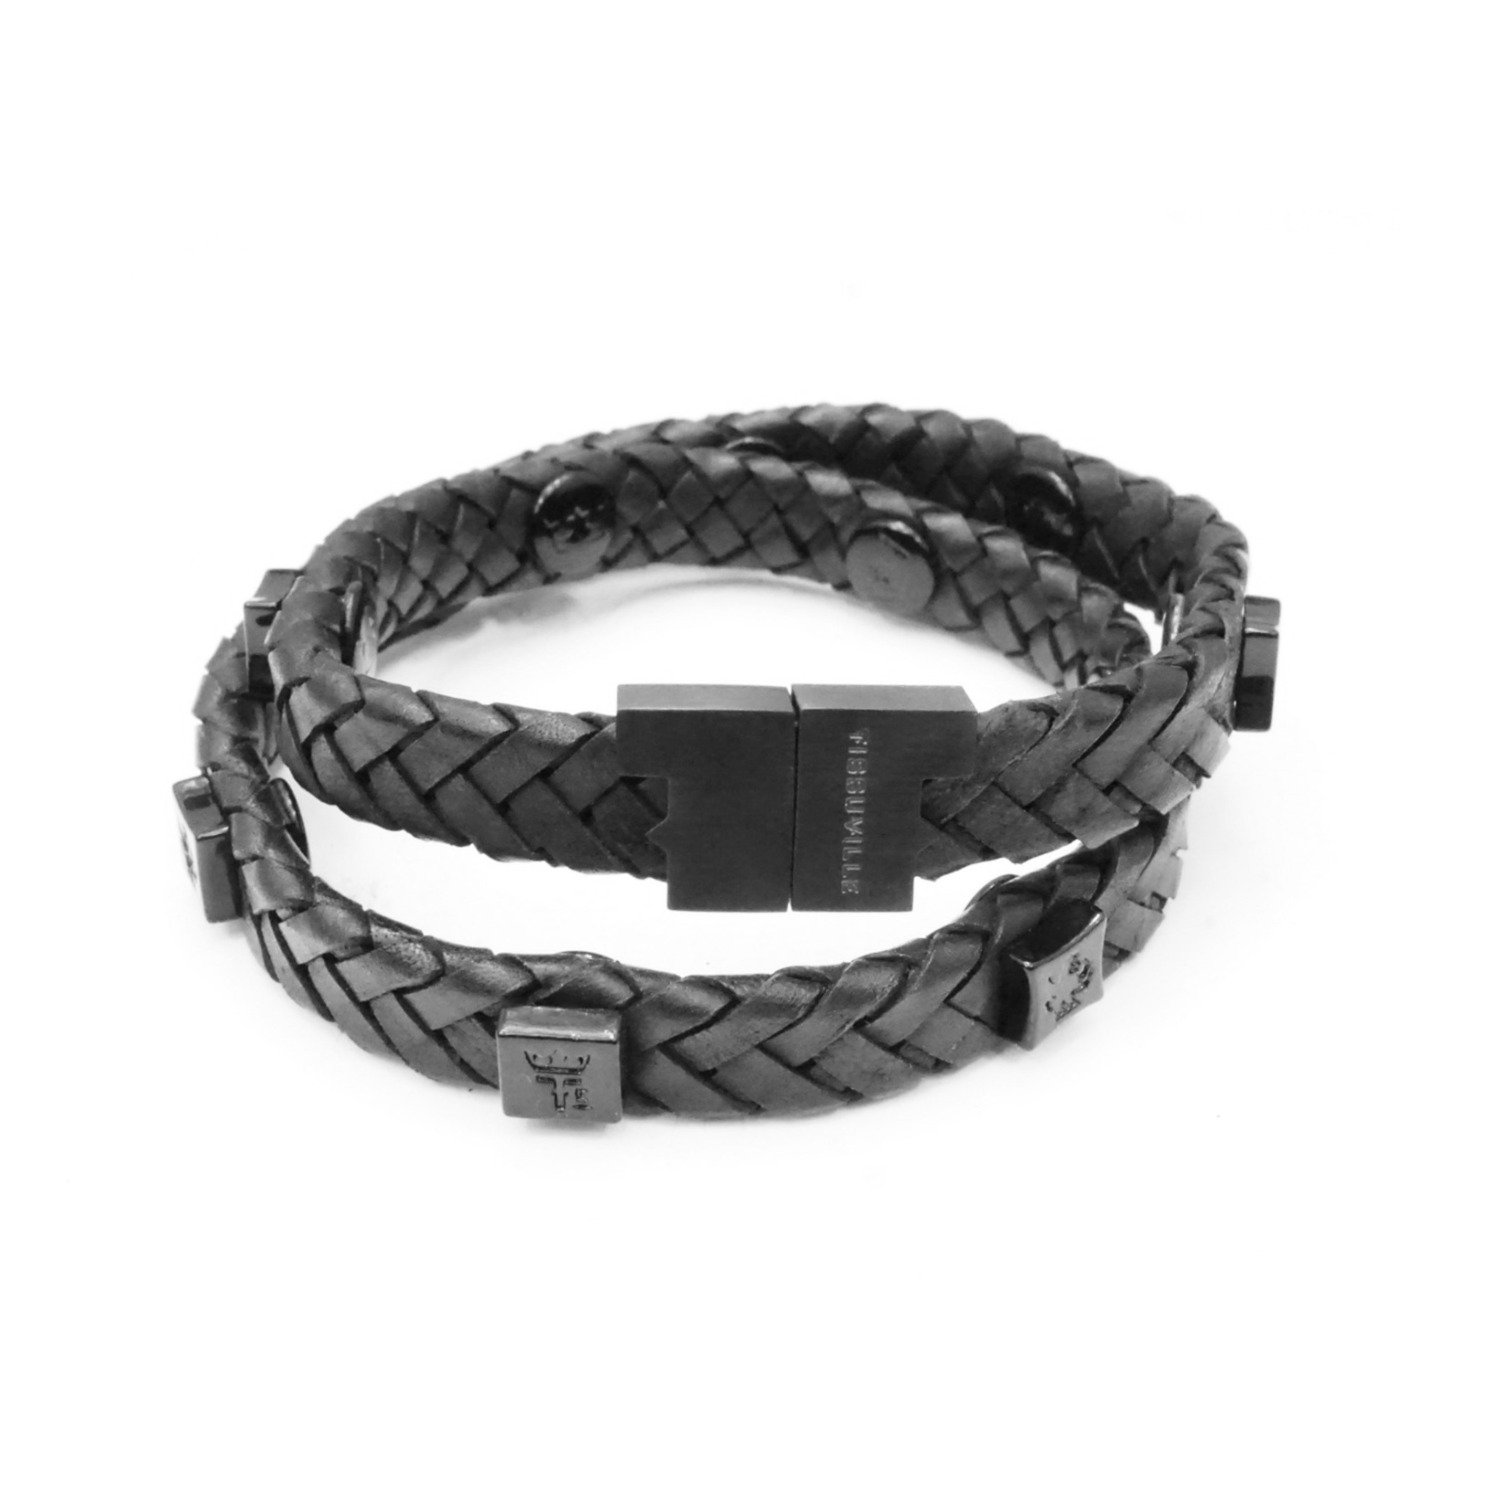 Black Double Wrap Leather Bracelet with Black Hardware - Tarmac, Tissuville